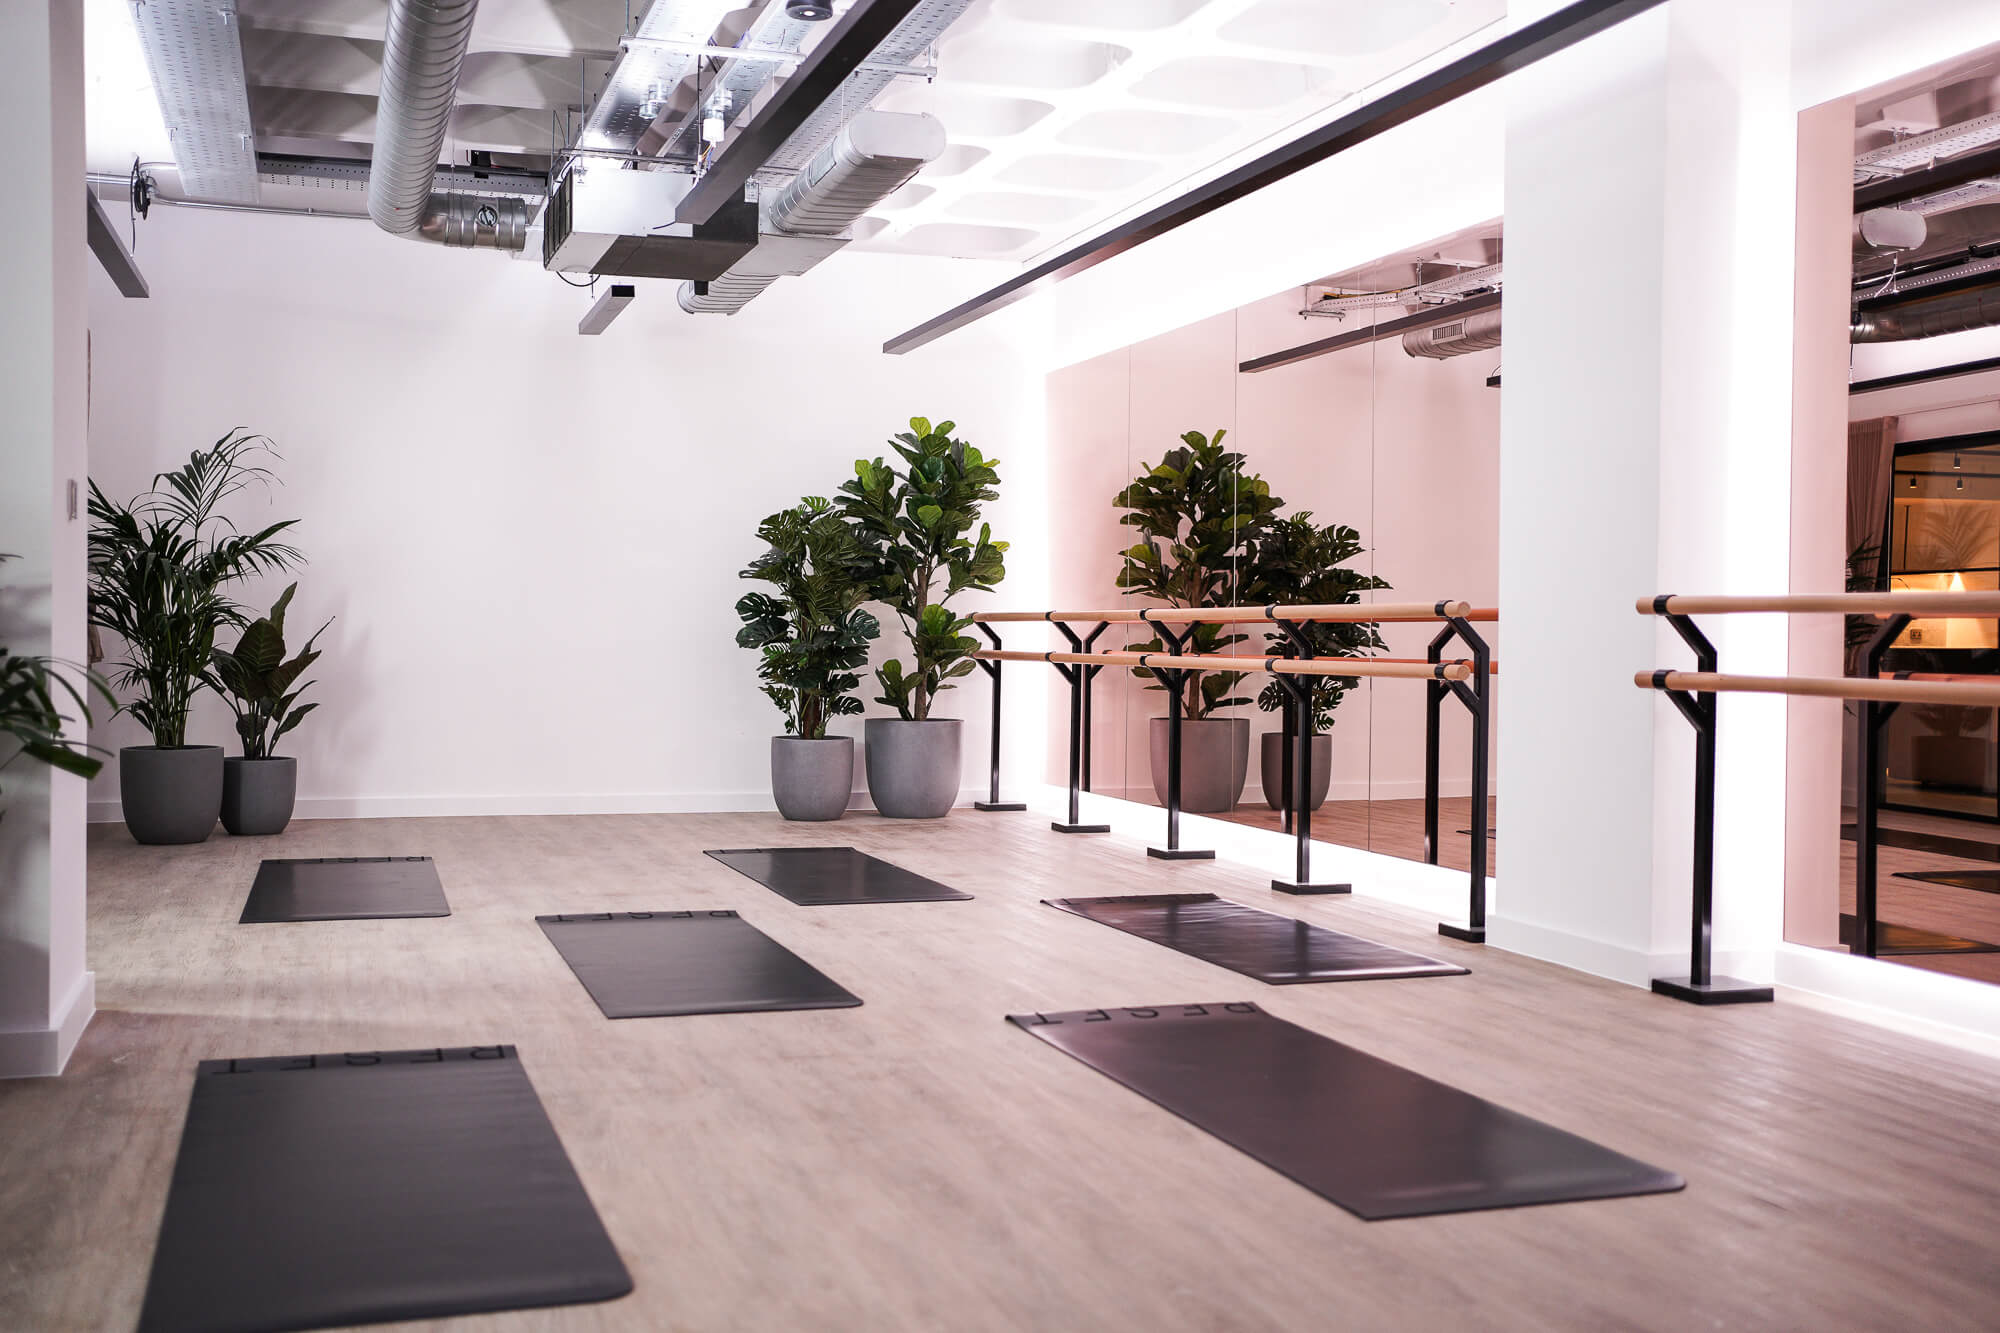 RESET - yoga studio set out with mats